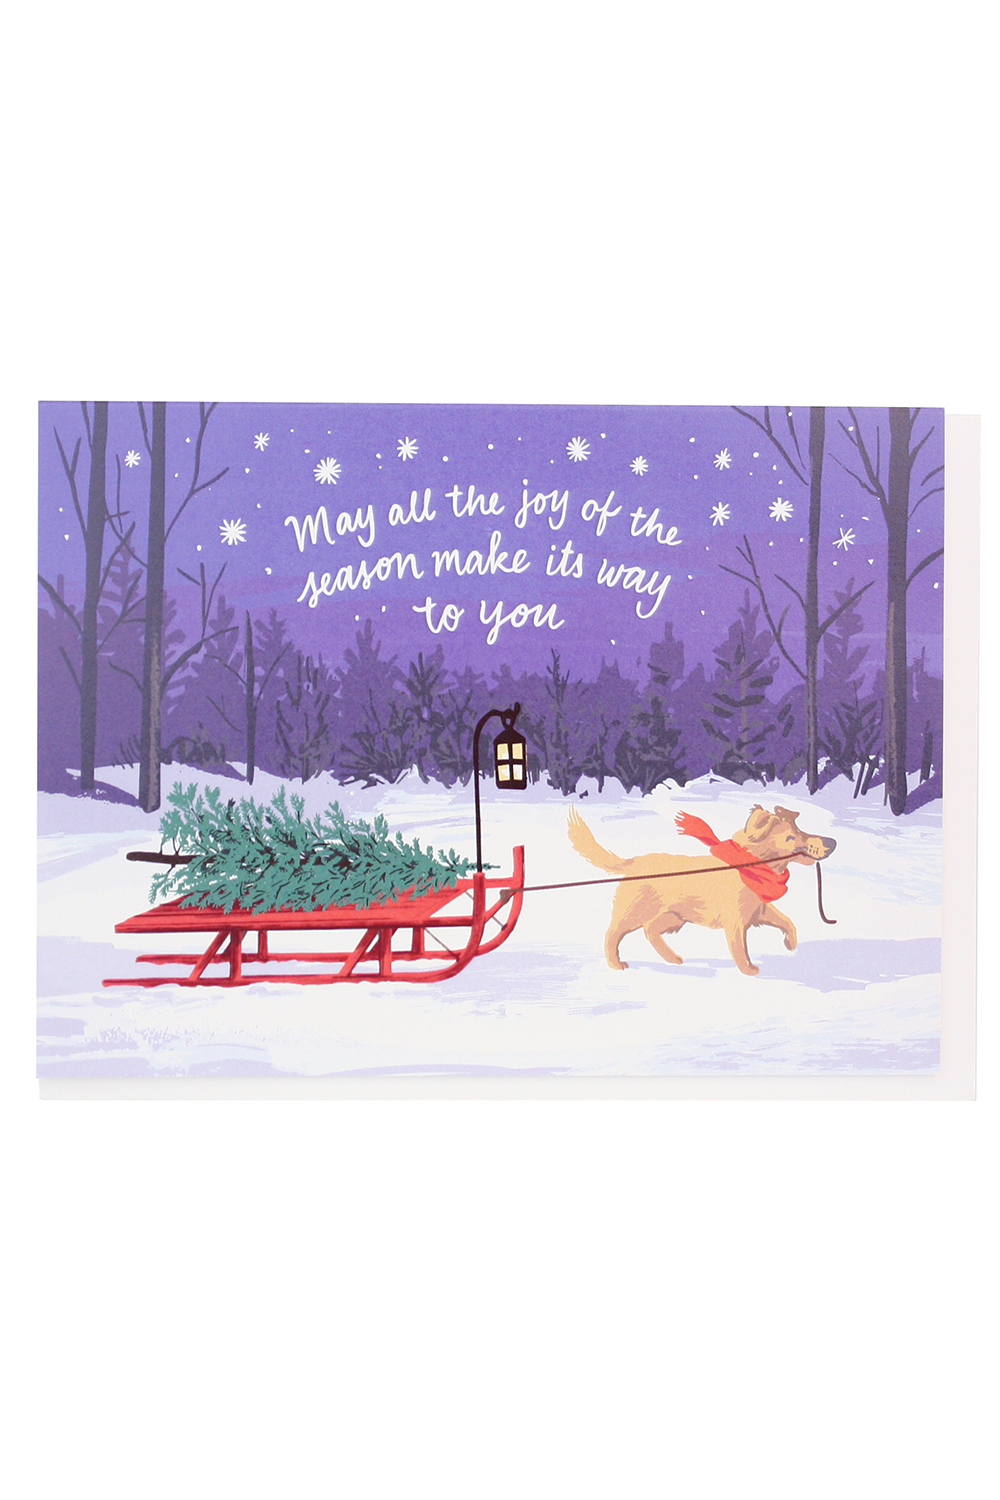 Smudgey Holiday Greeting Card - Sled Dog